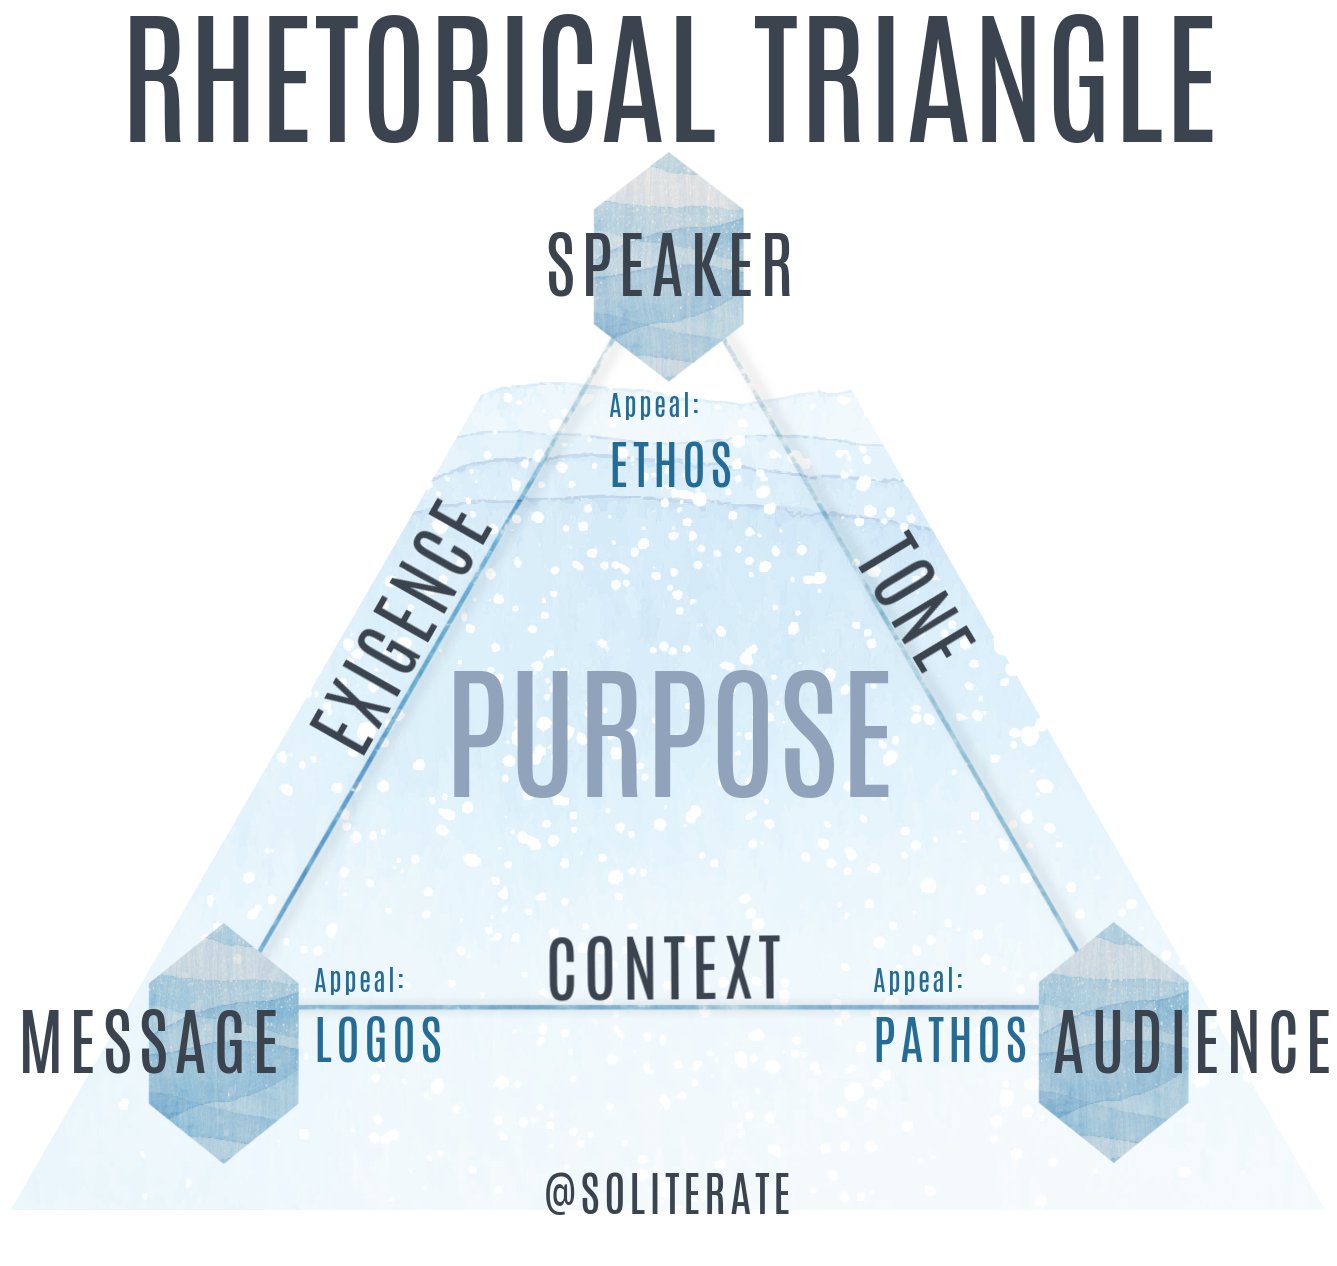 rhetorical triangle context